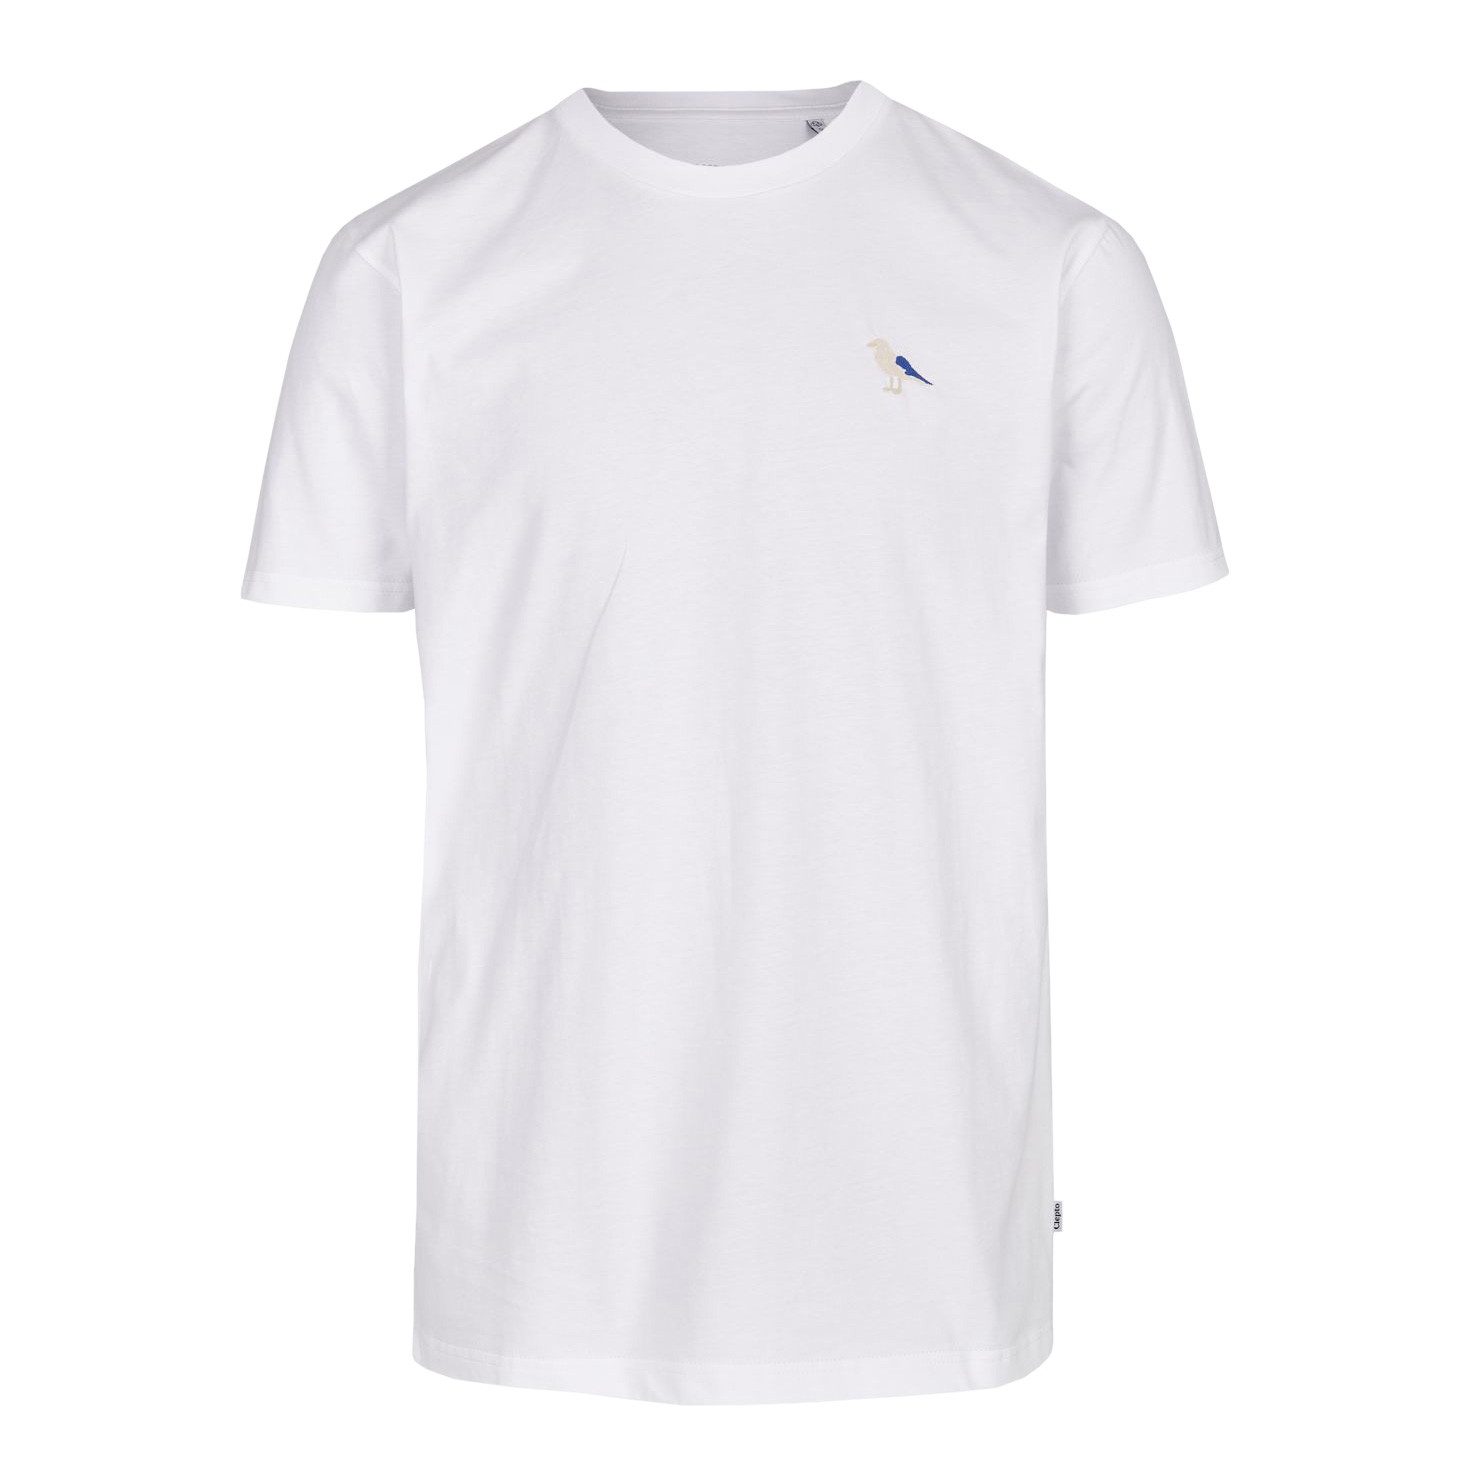 Cleptomanicx T-Shirt Embro Gull - white